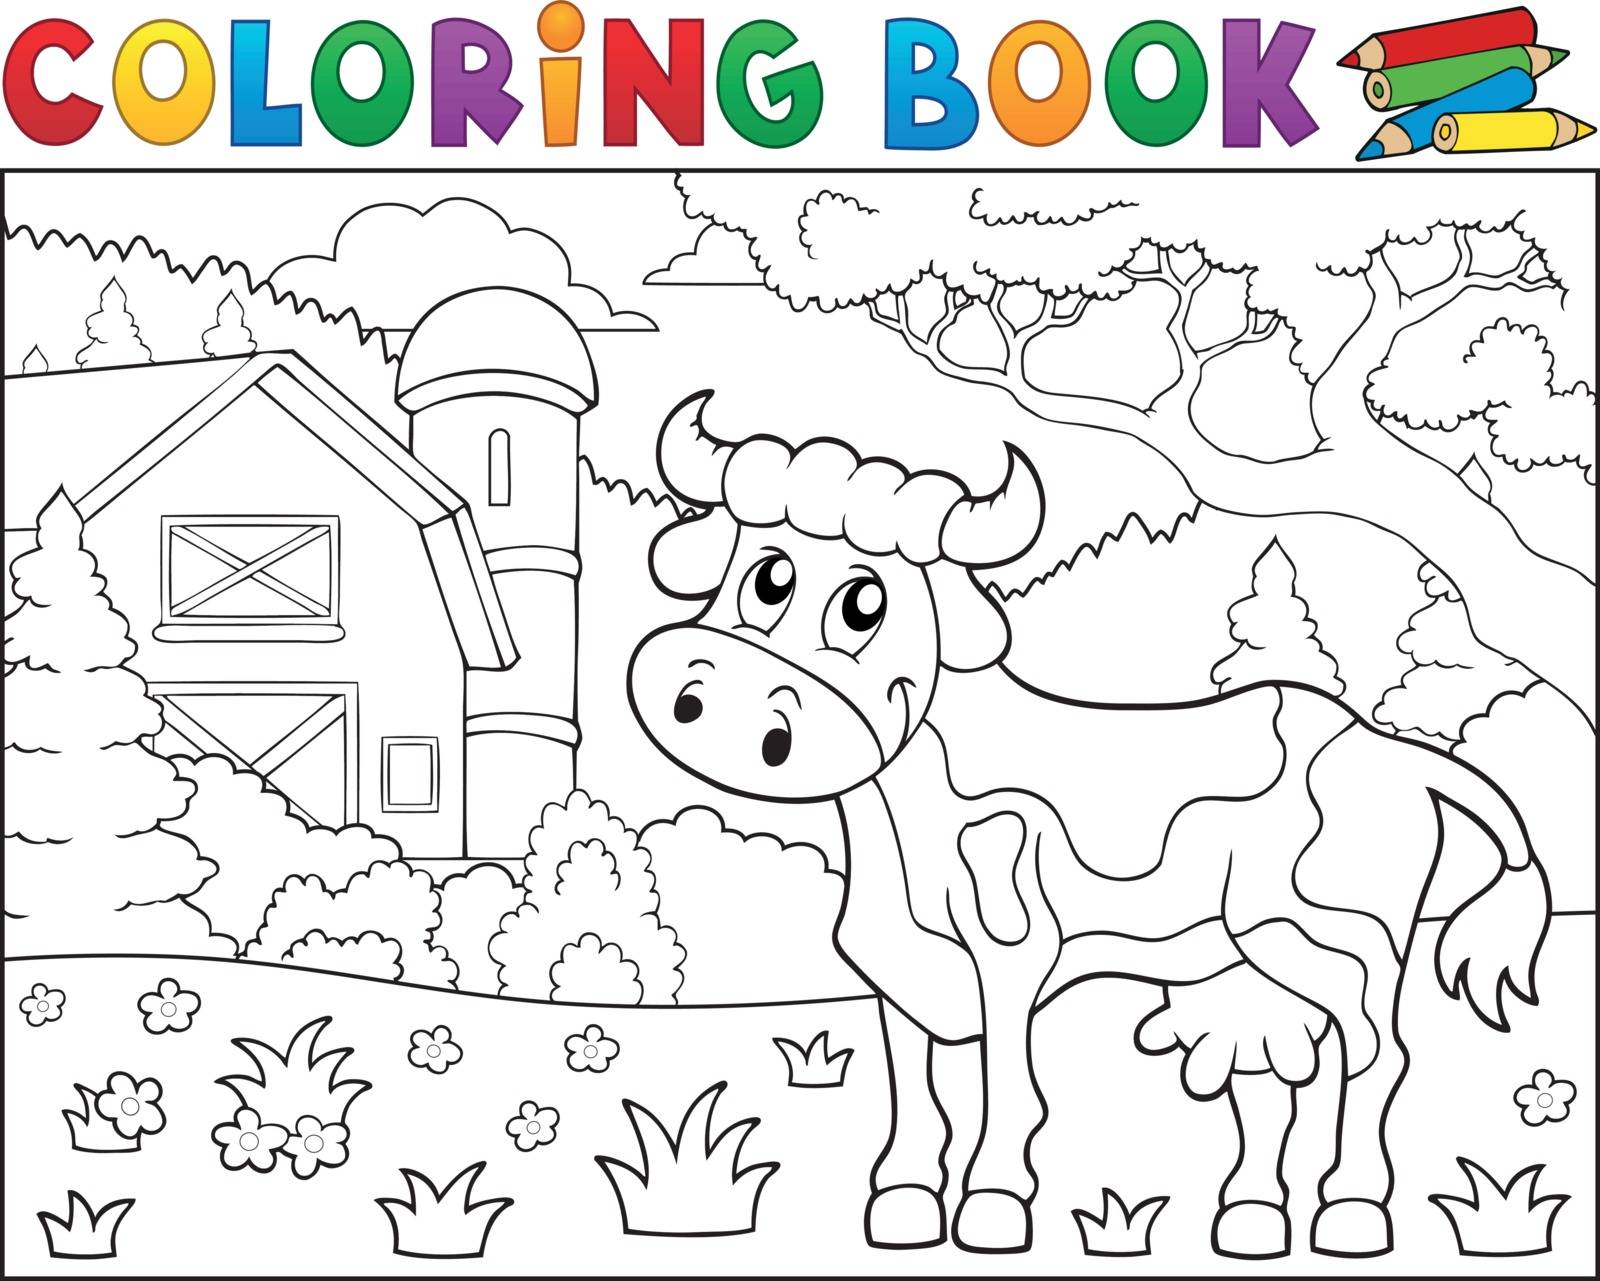 Coloring Book (Vector)